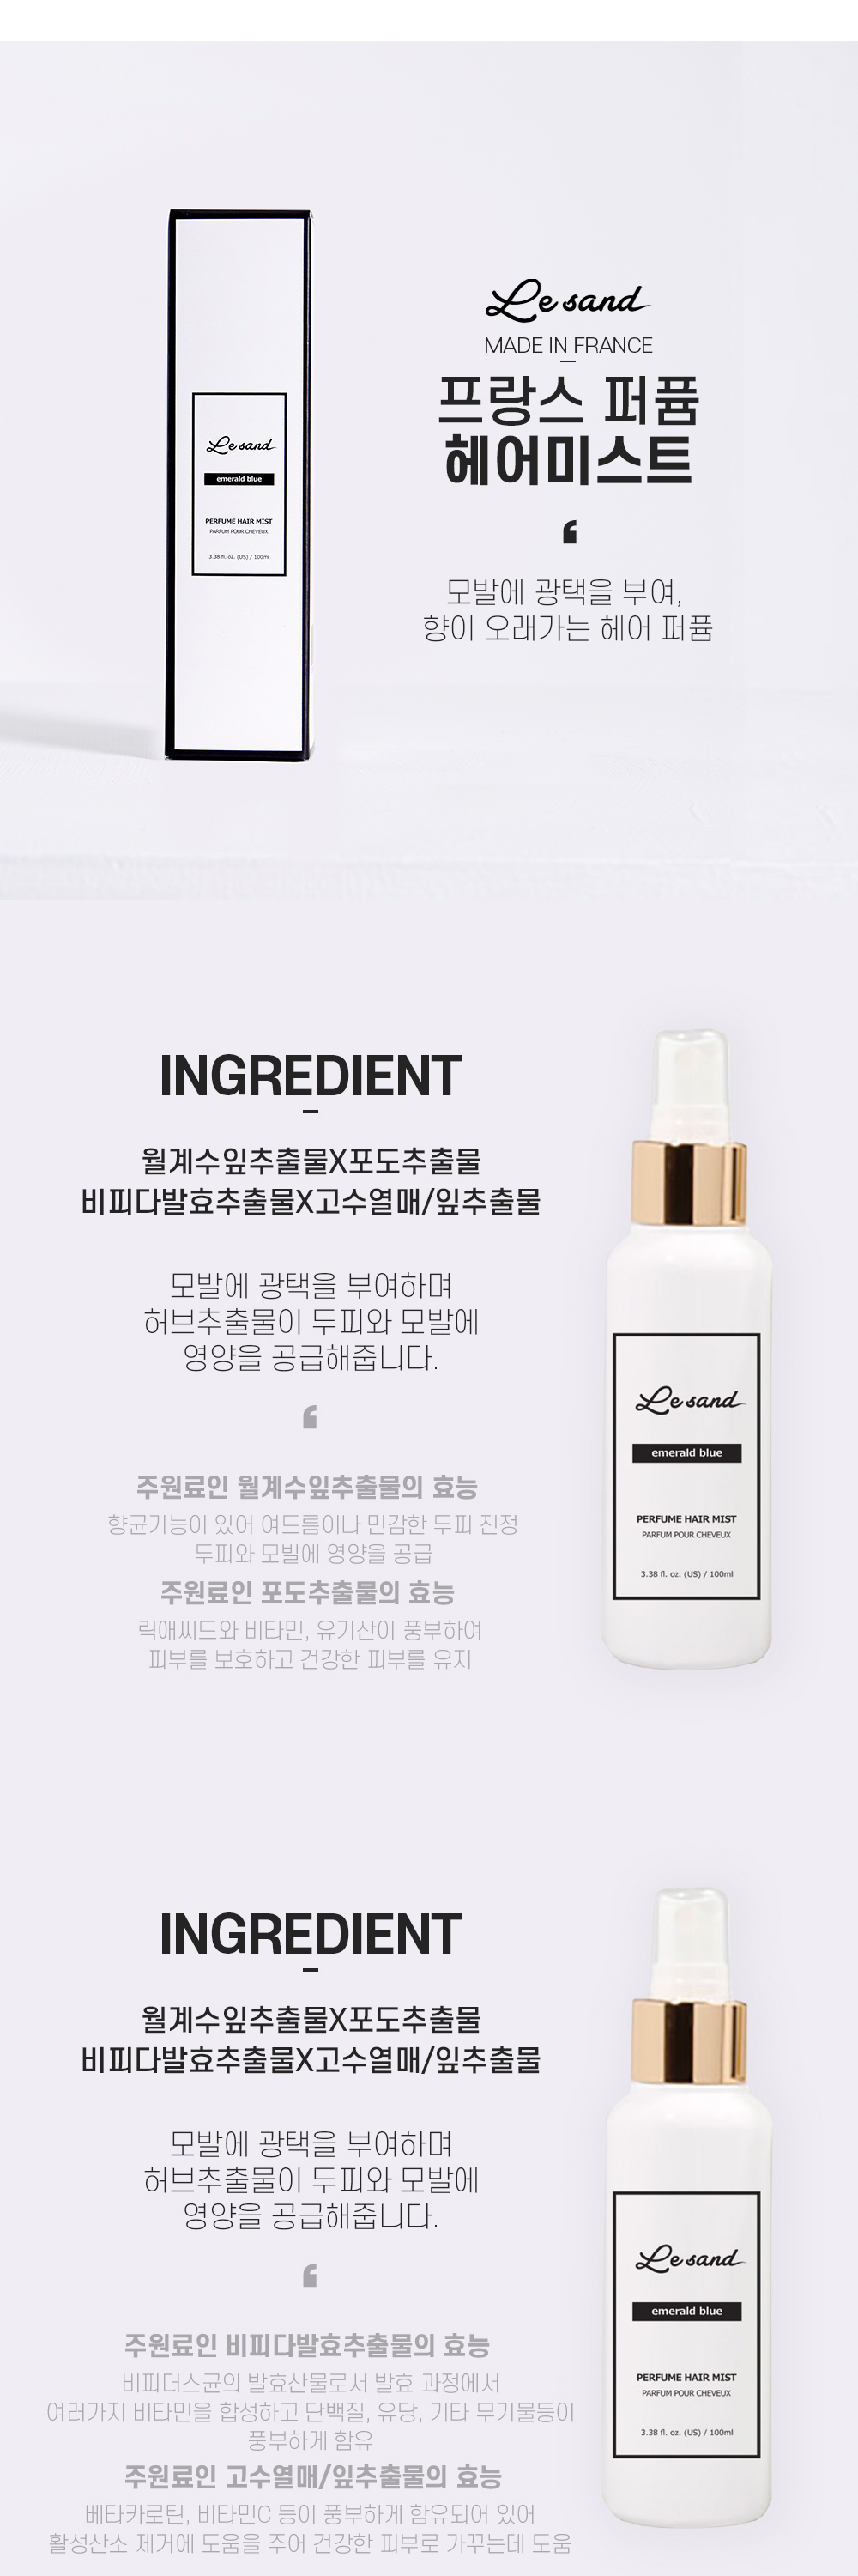 cosmetics product image-S1L8